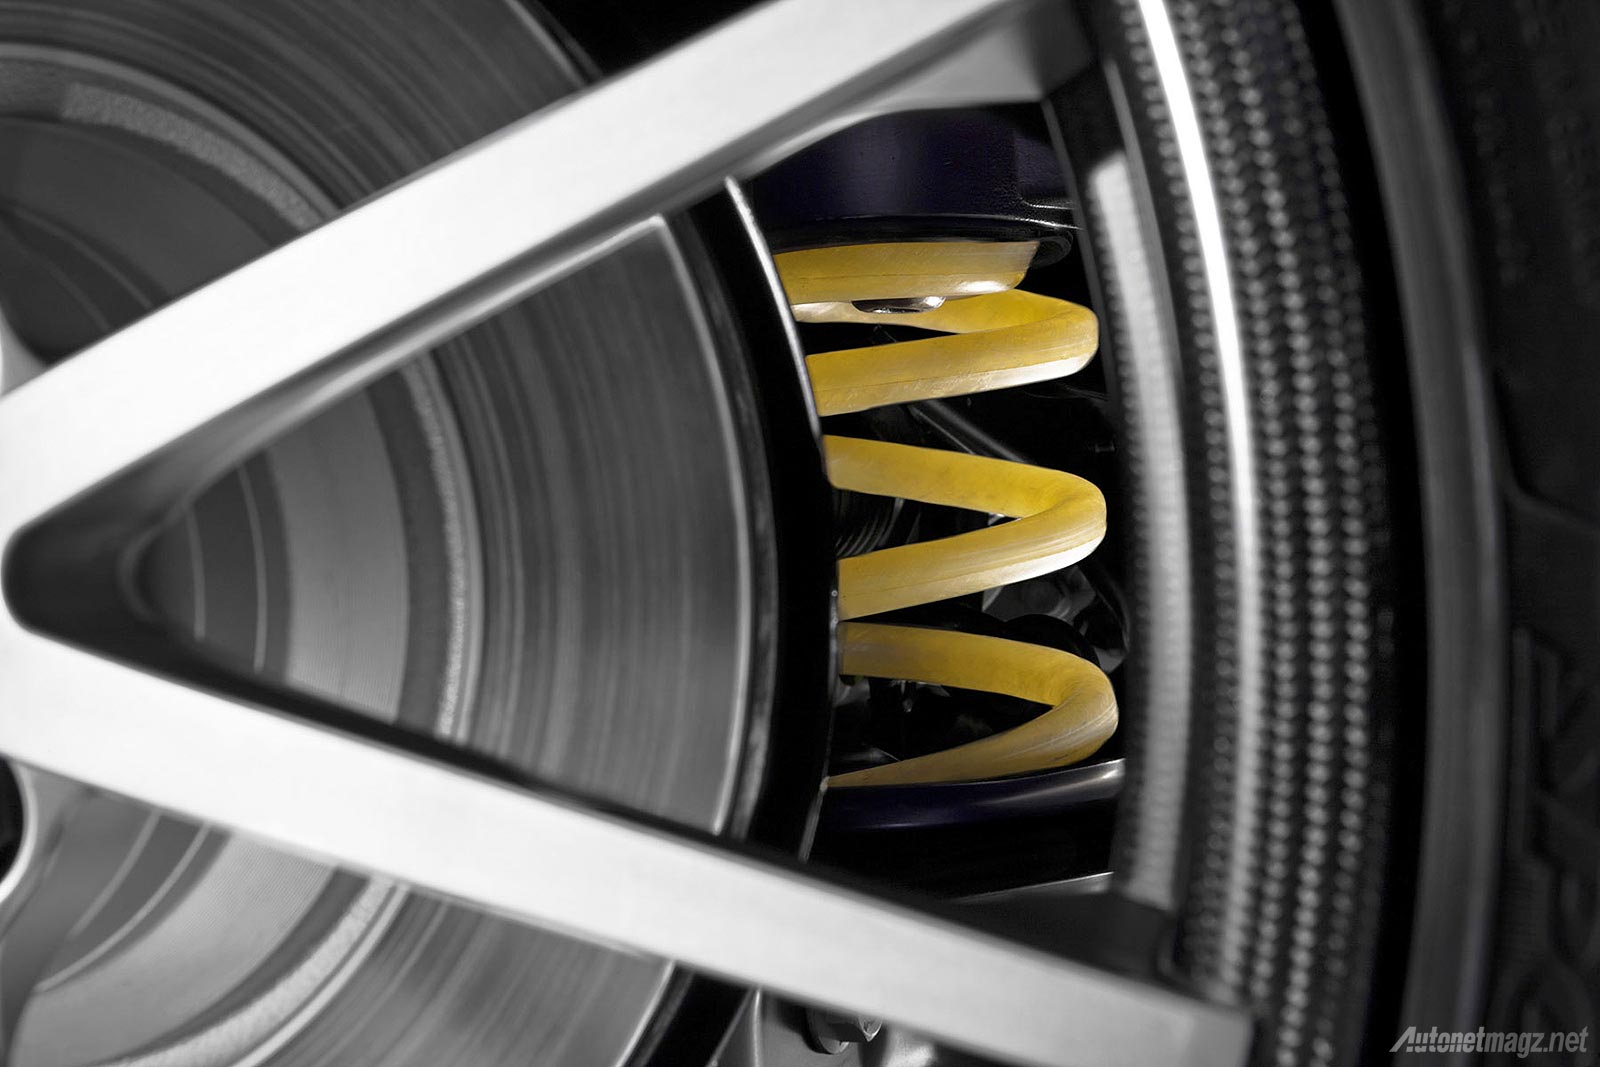 Audi, Fiber glass coil springs from Audi: Keren! Audi Bikin Per dari Fiberglass